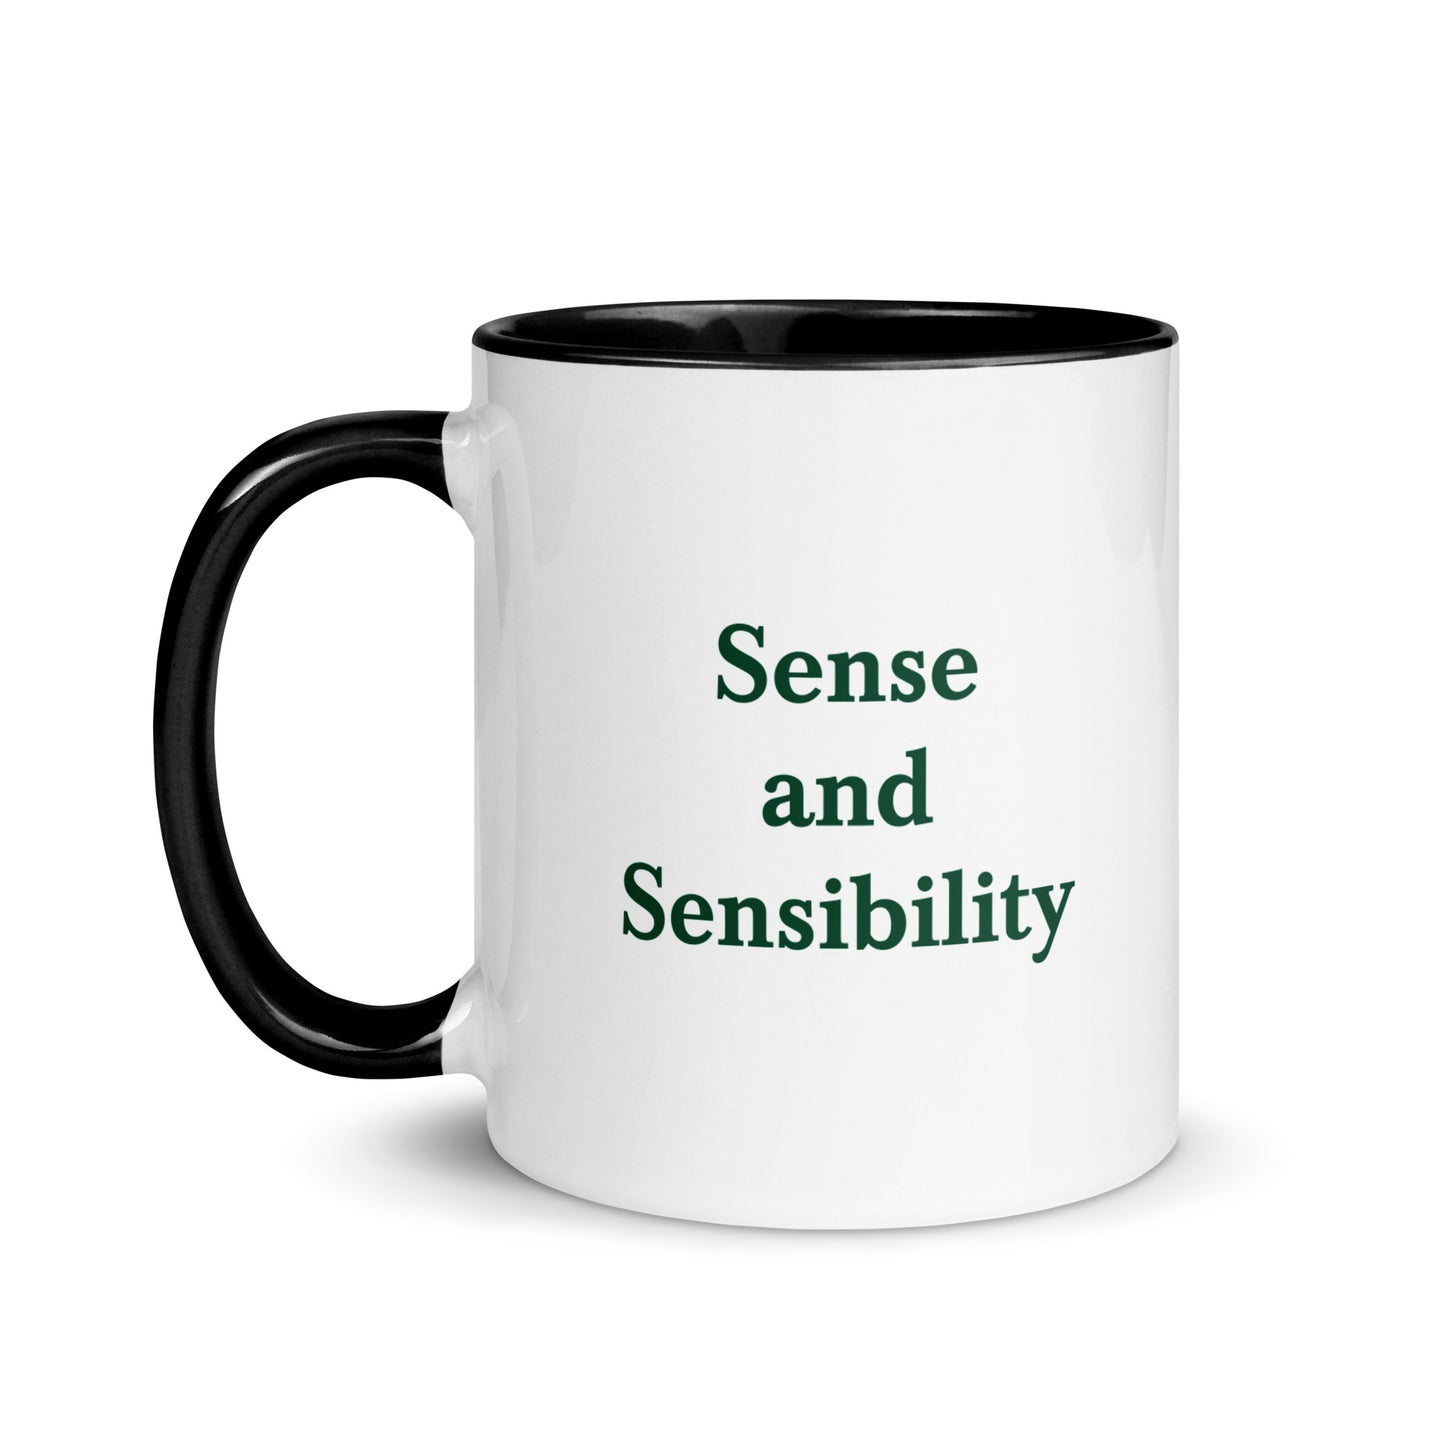 Sense and Sensibility mug with color inside